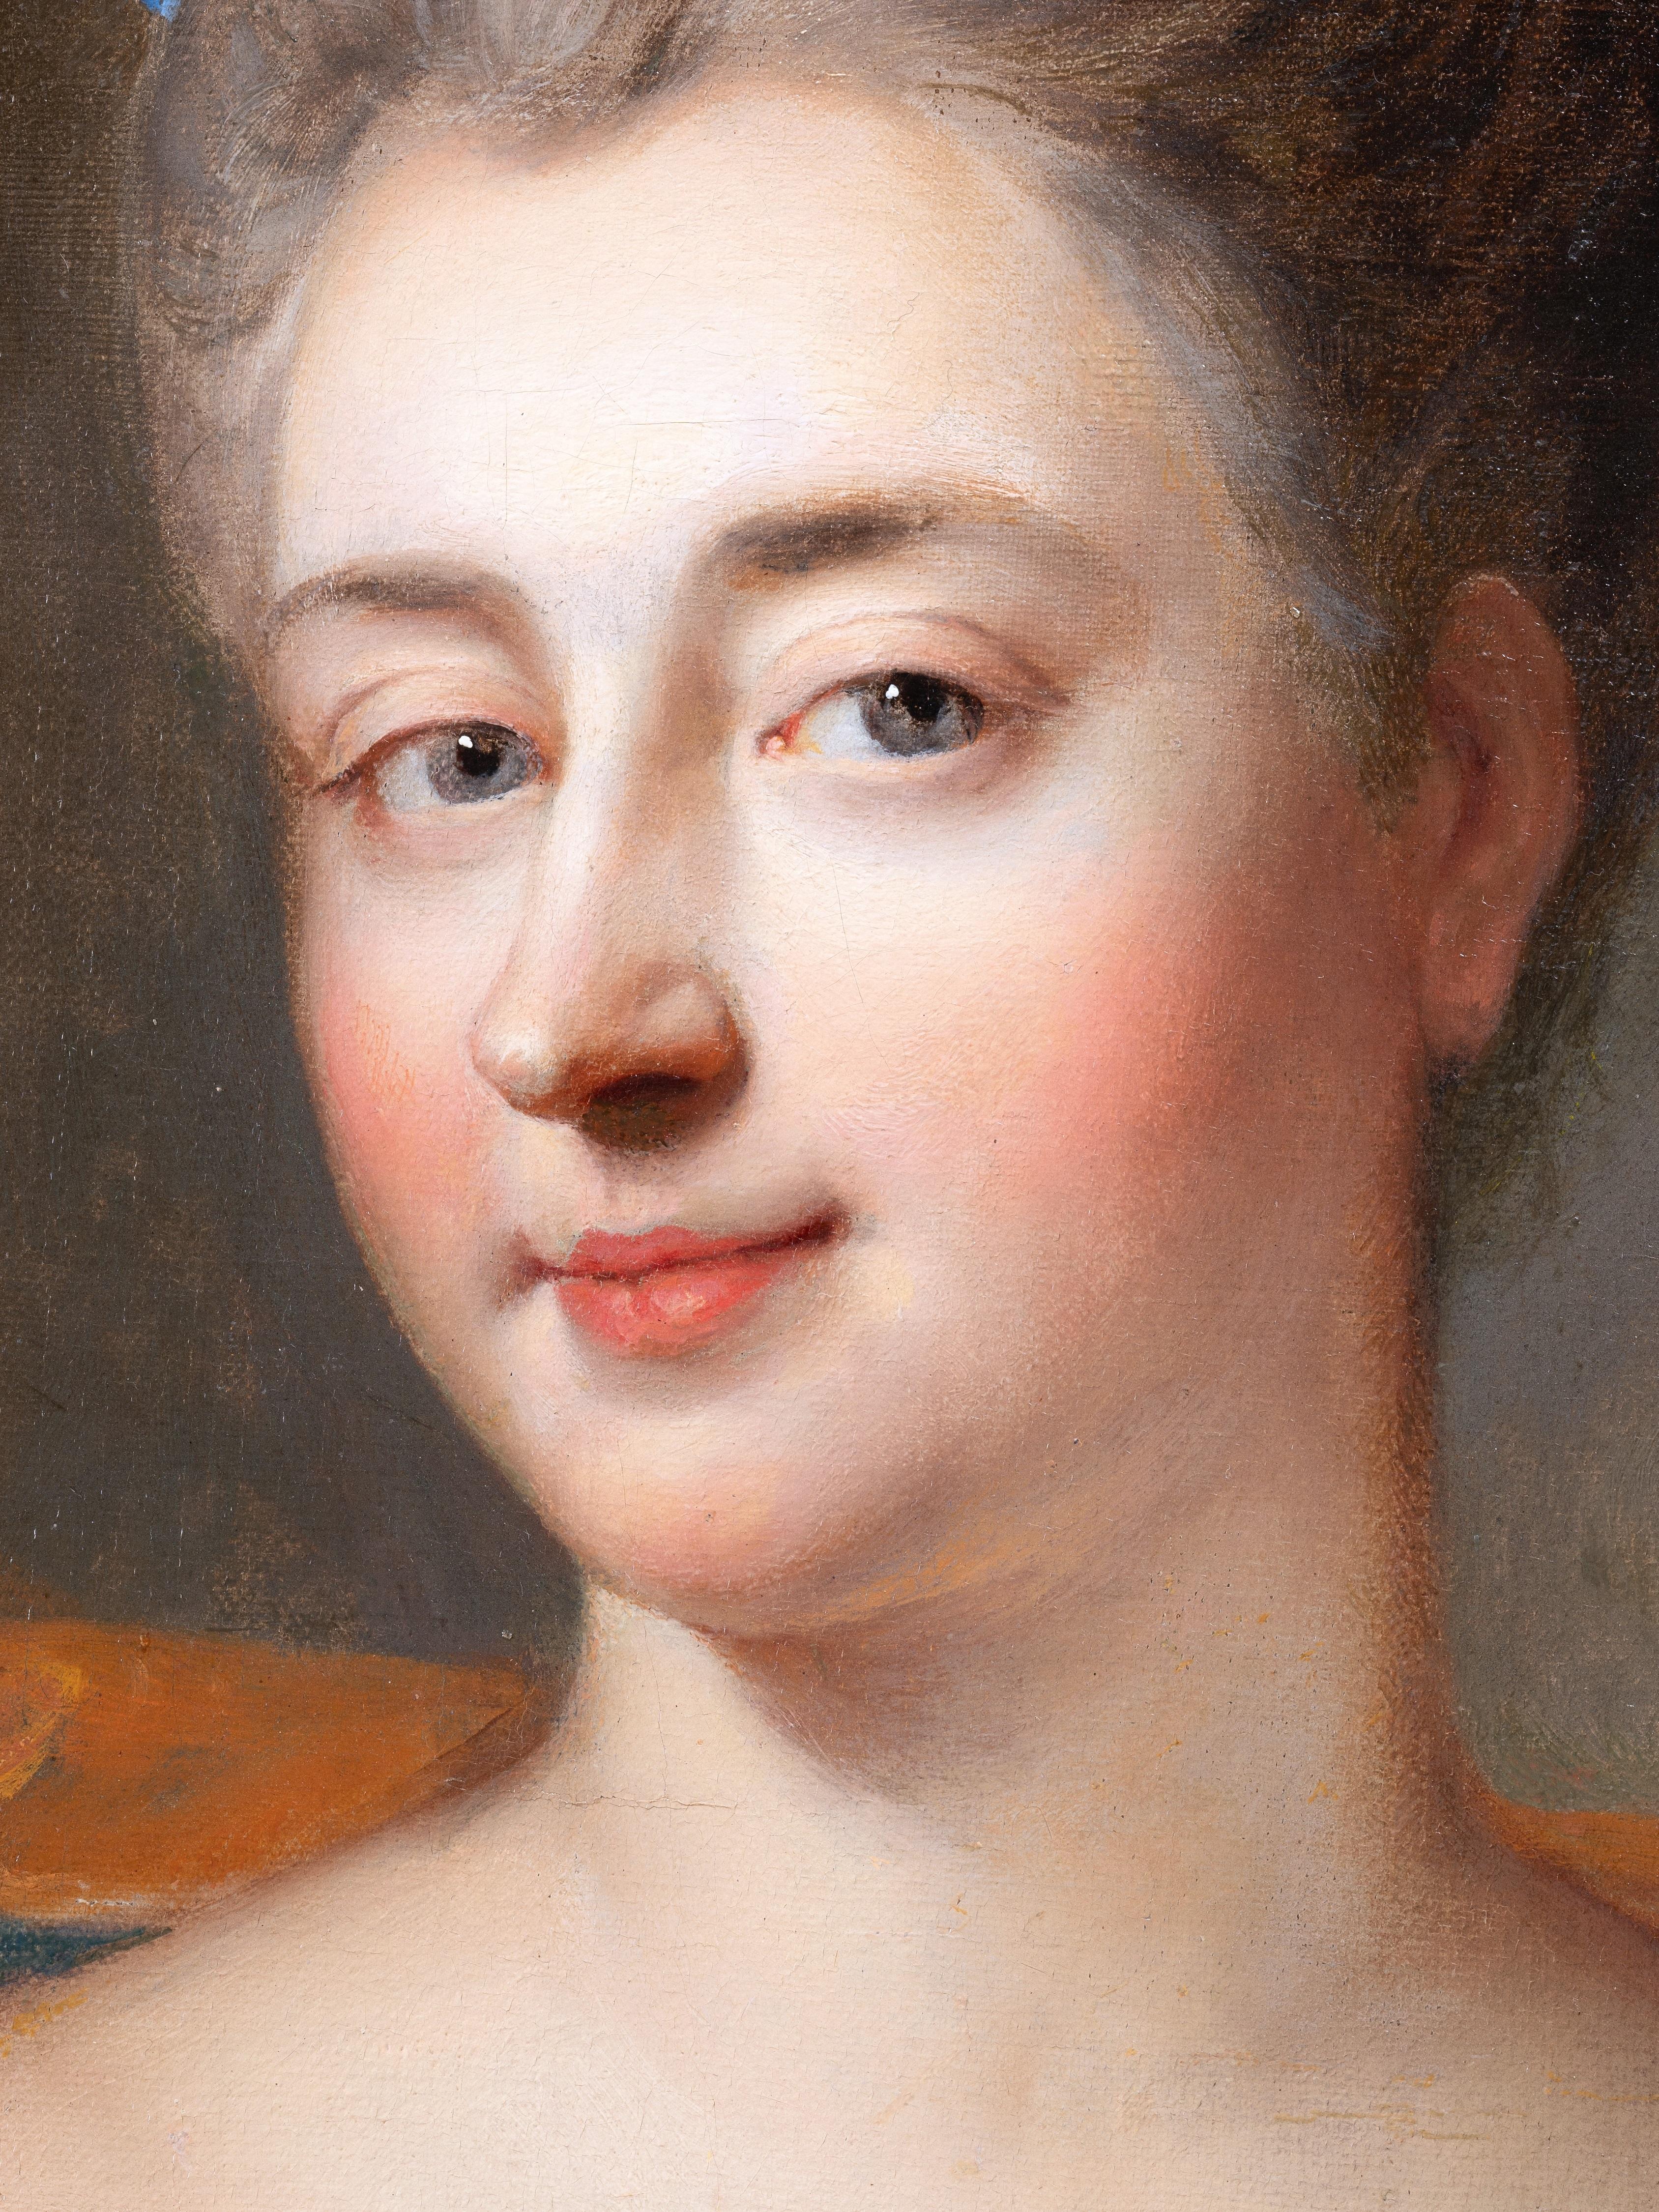 18th century French - Portrait of Duchesse de Fontanges by François de Troy - Old Masters Painting by François de Troy (Toulouse 1645 - Paris 1730)